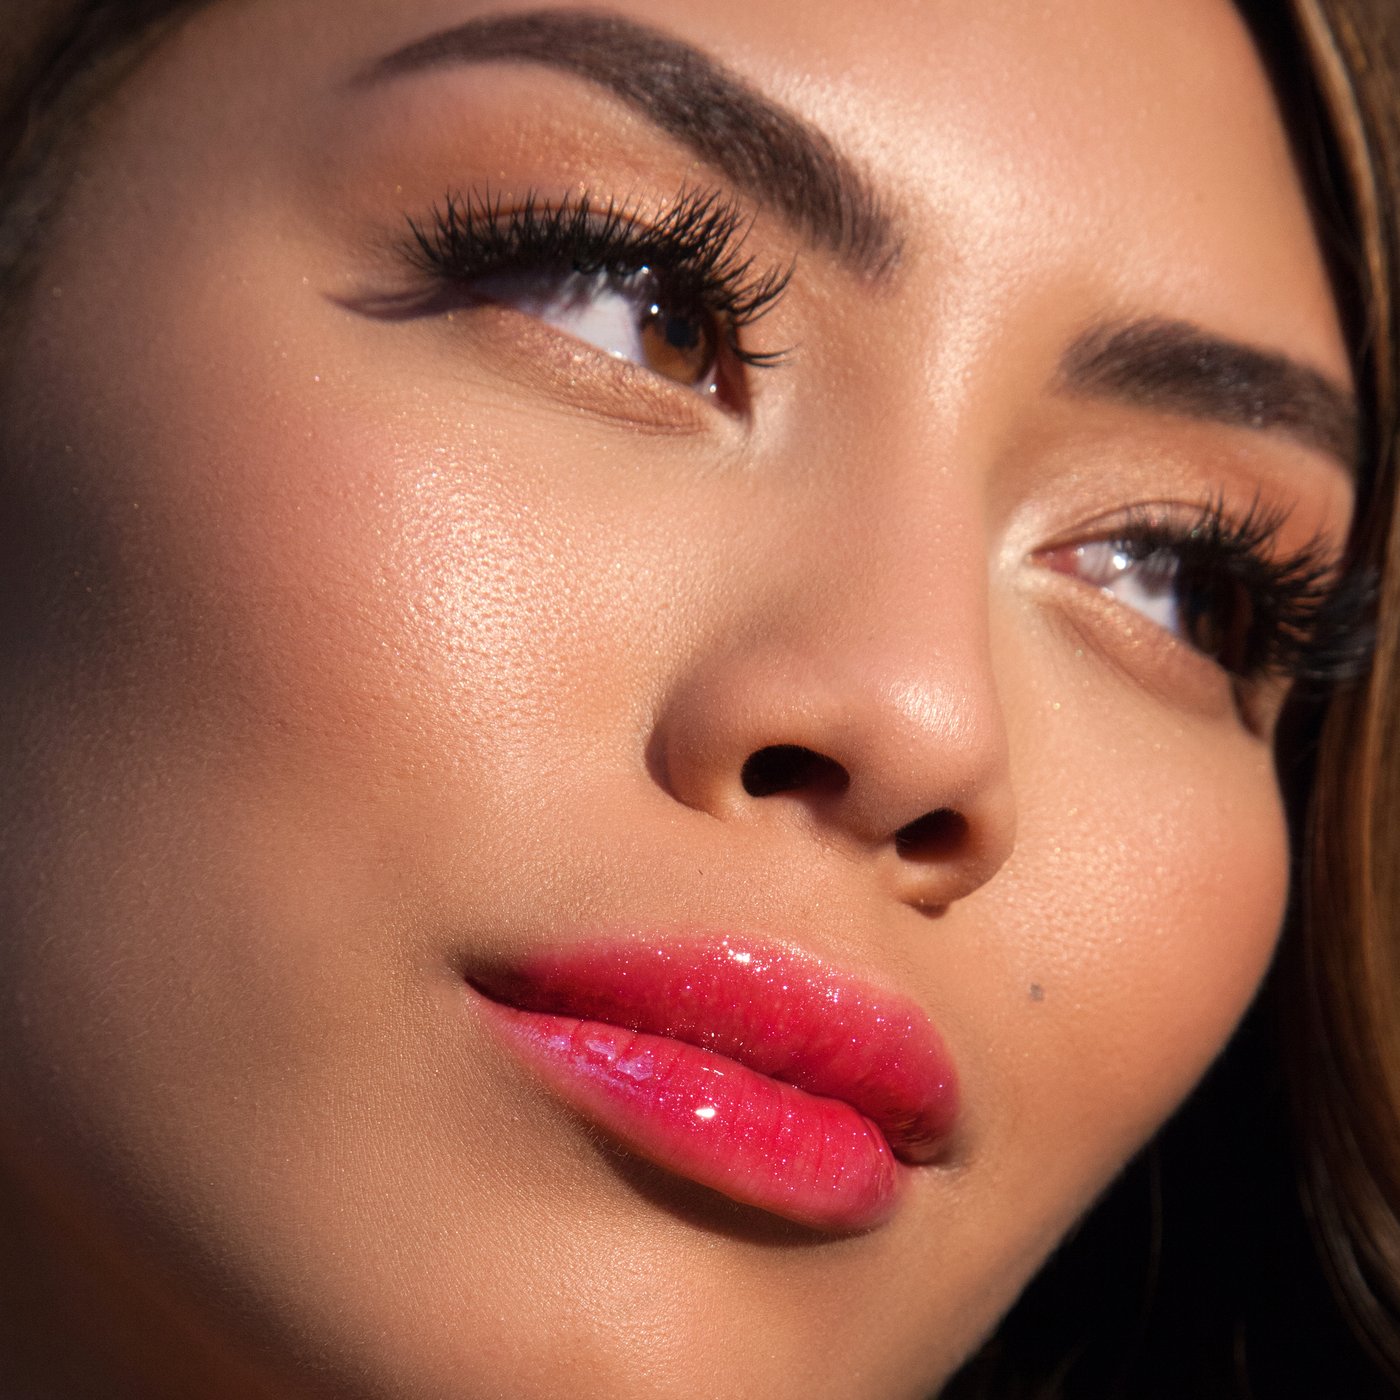 theBalm cosmetics PLUMP YOUR PUCKER® Lip Gloss Magnify - sheer magenta glitter